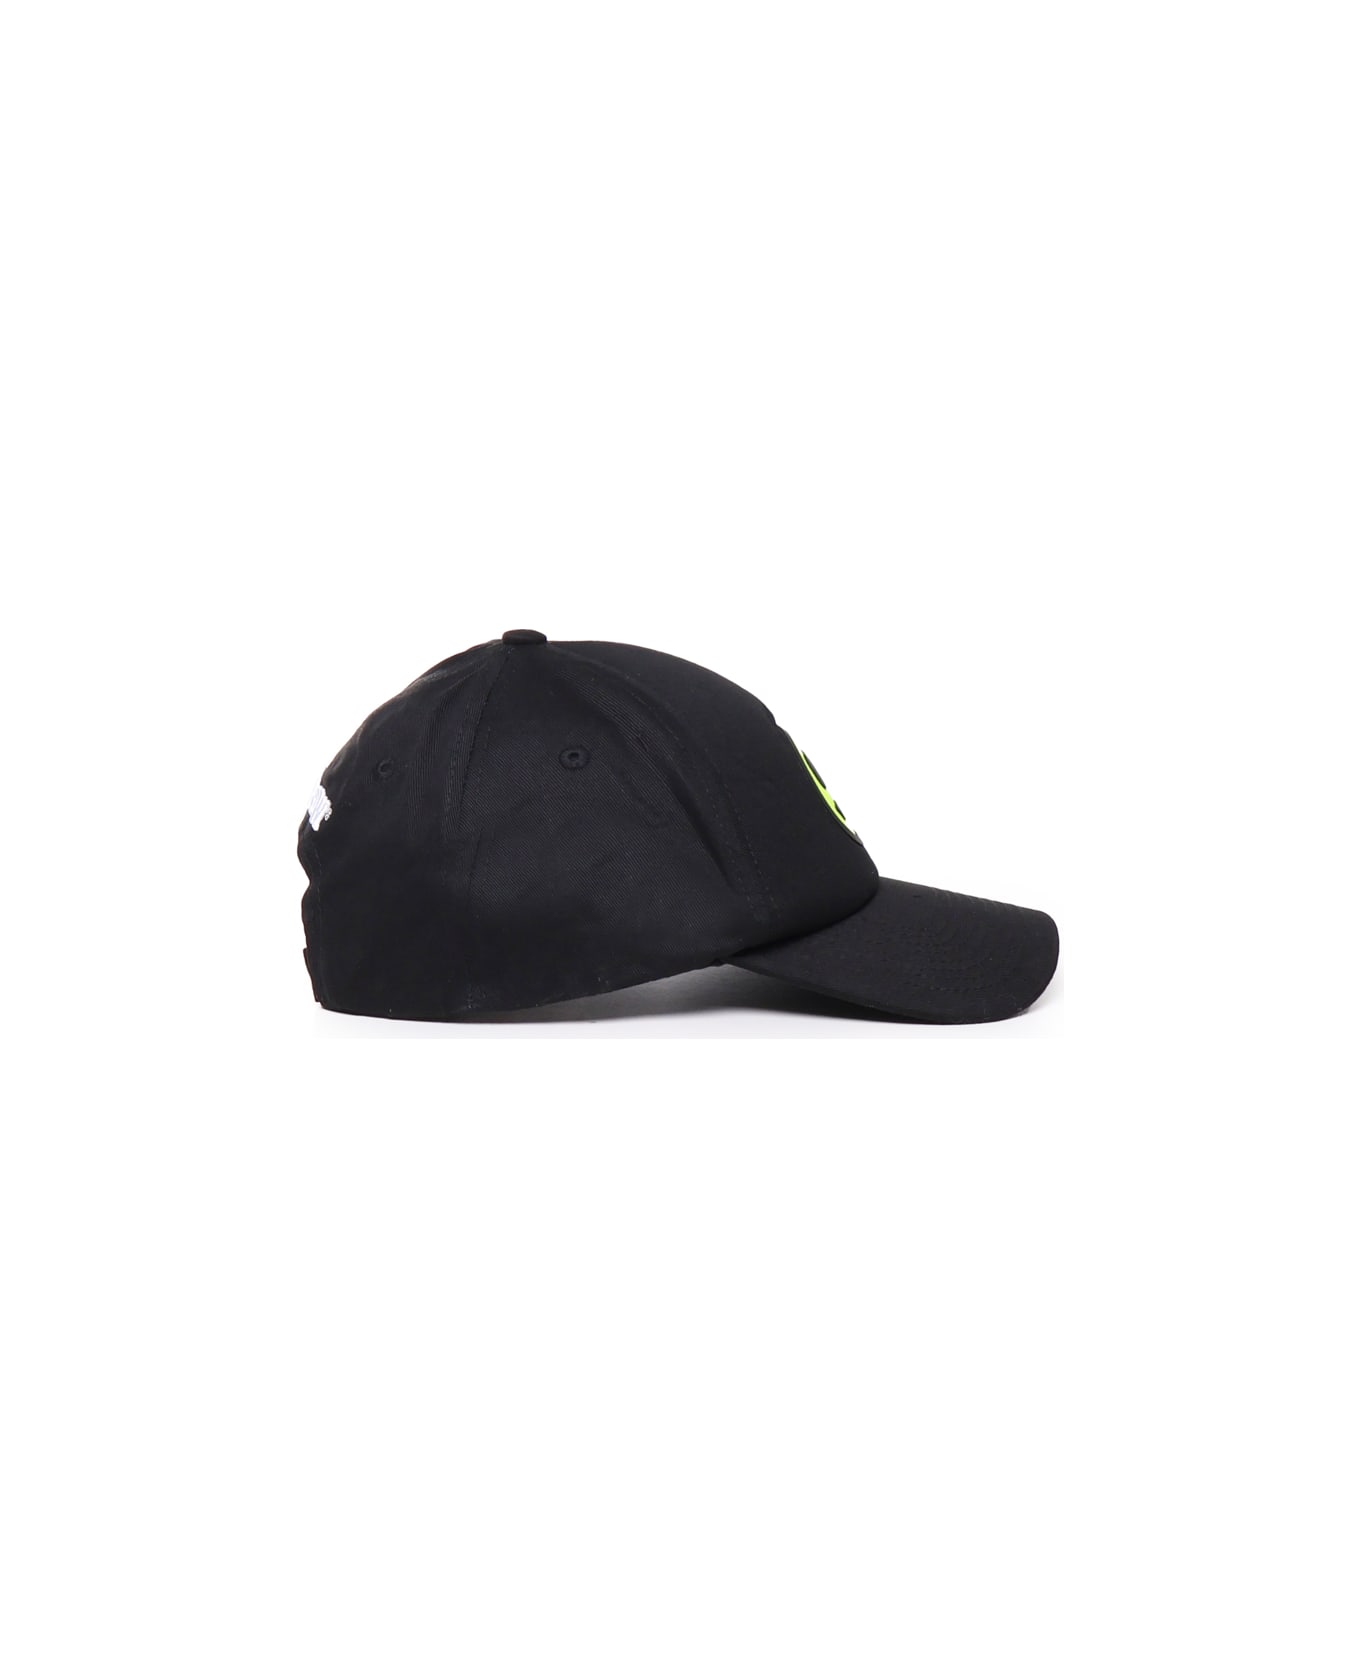 Barrow Logo Hat - Nero 帽子